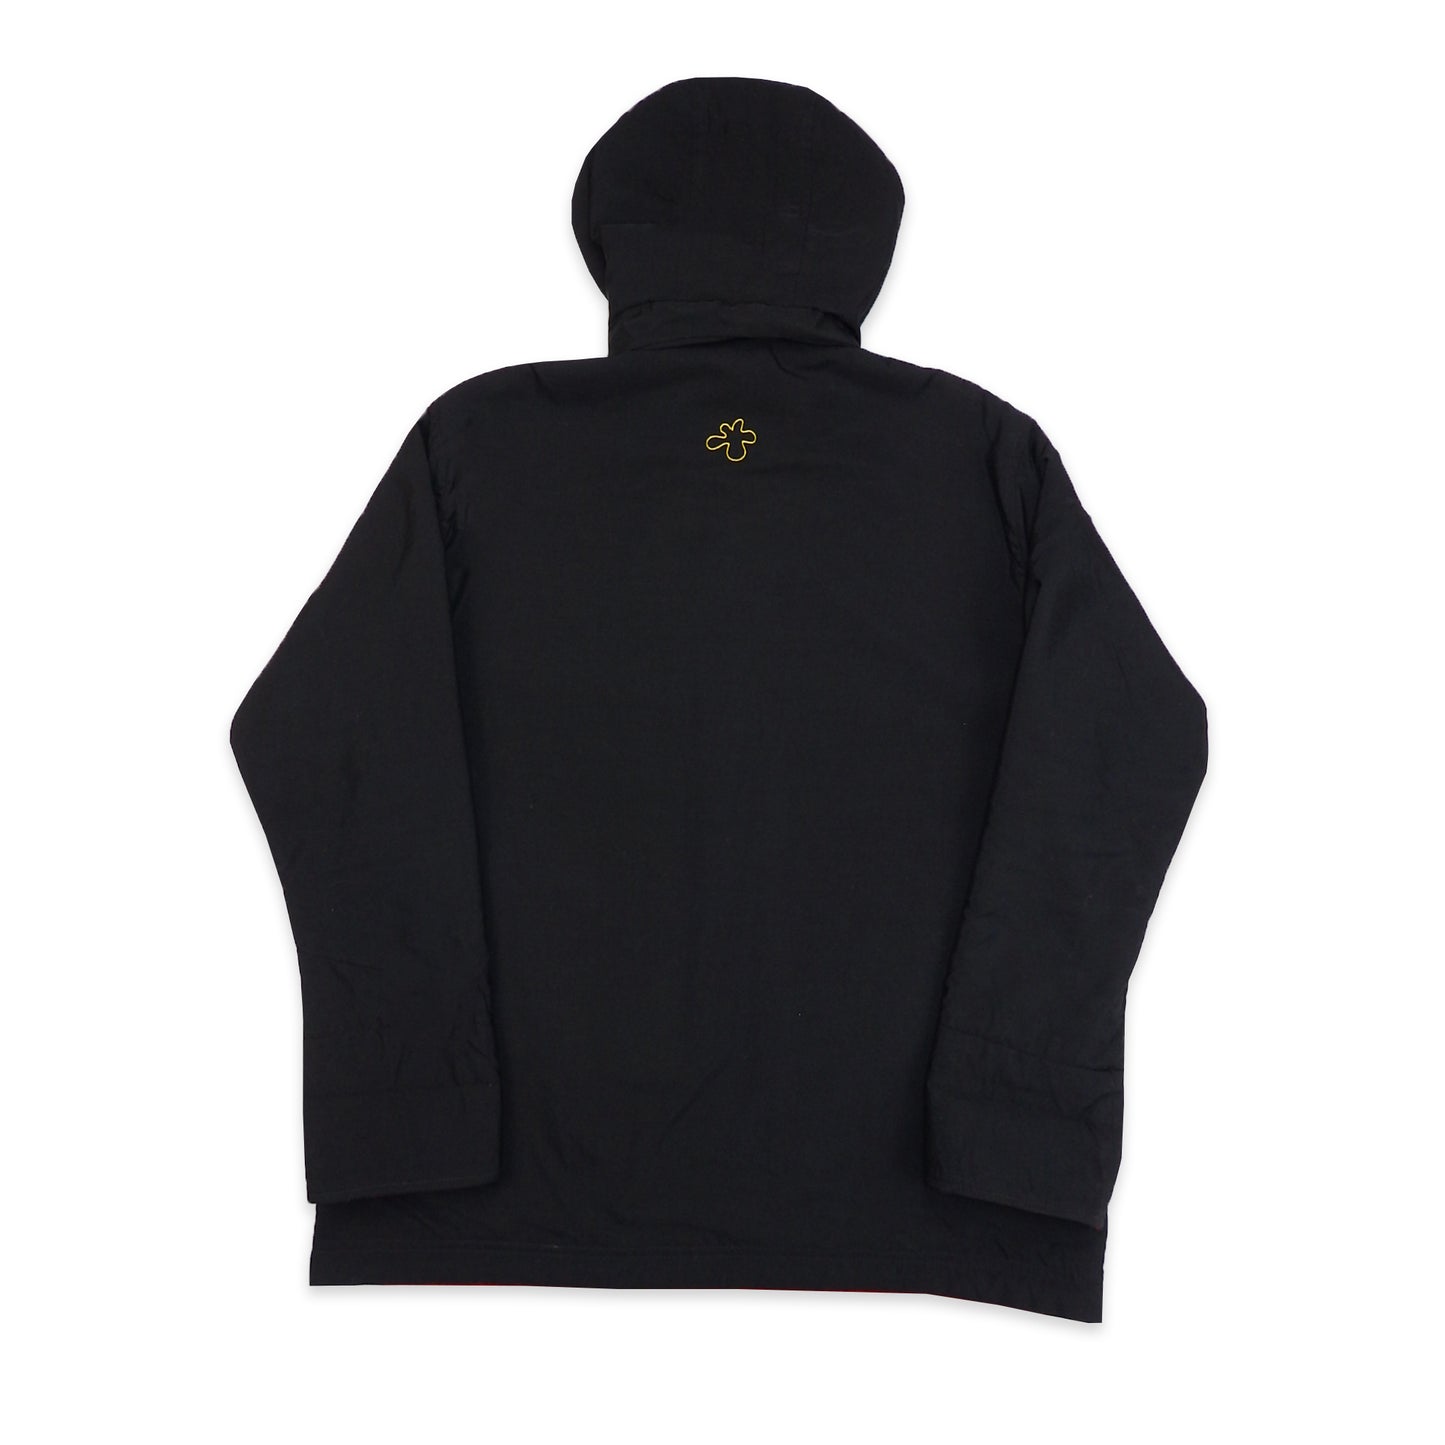 Custard Shop Black Fleece Lined Jacket | Size Large